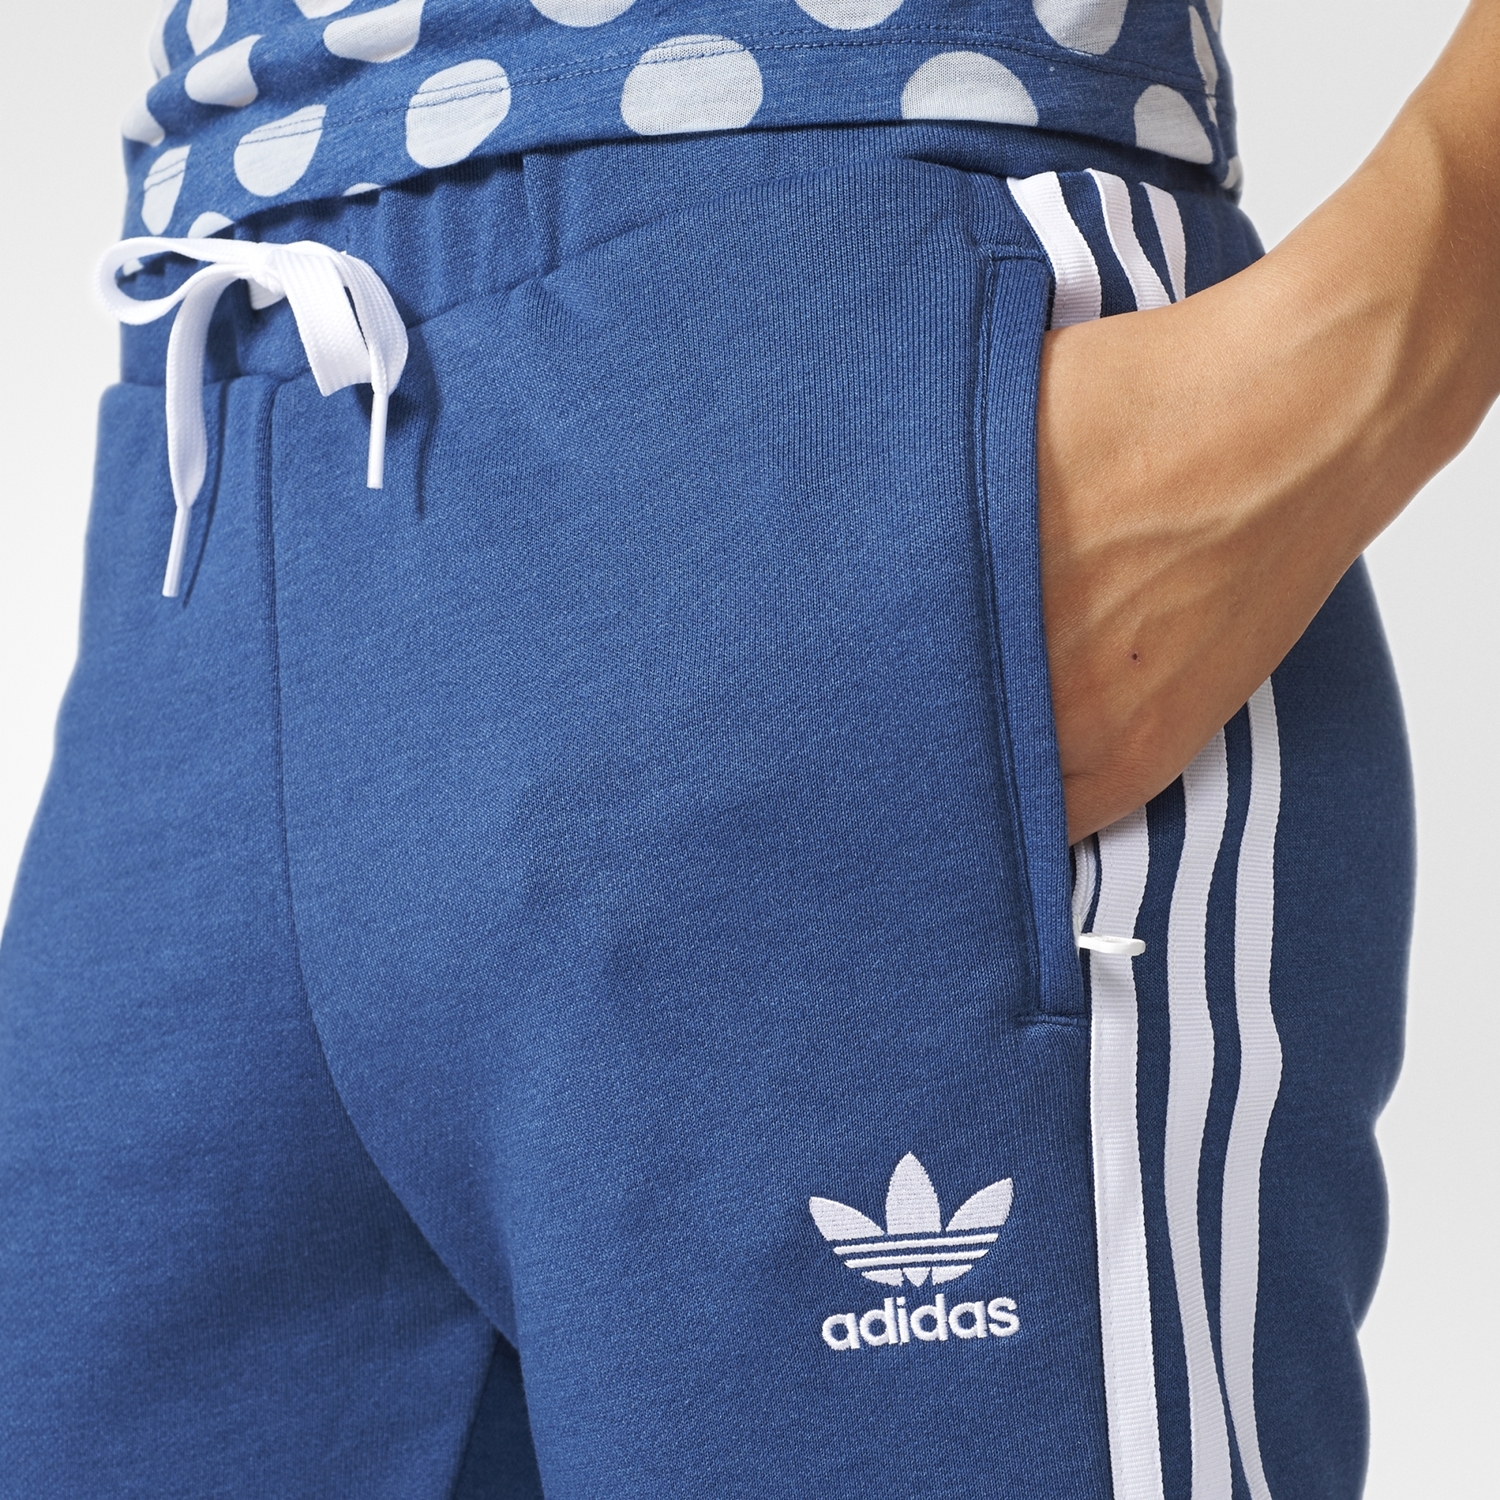 Adidas Originals Regular Track Pant Cuffed NMD (Real Blue/Pearl